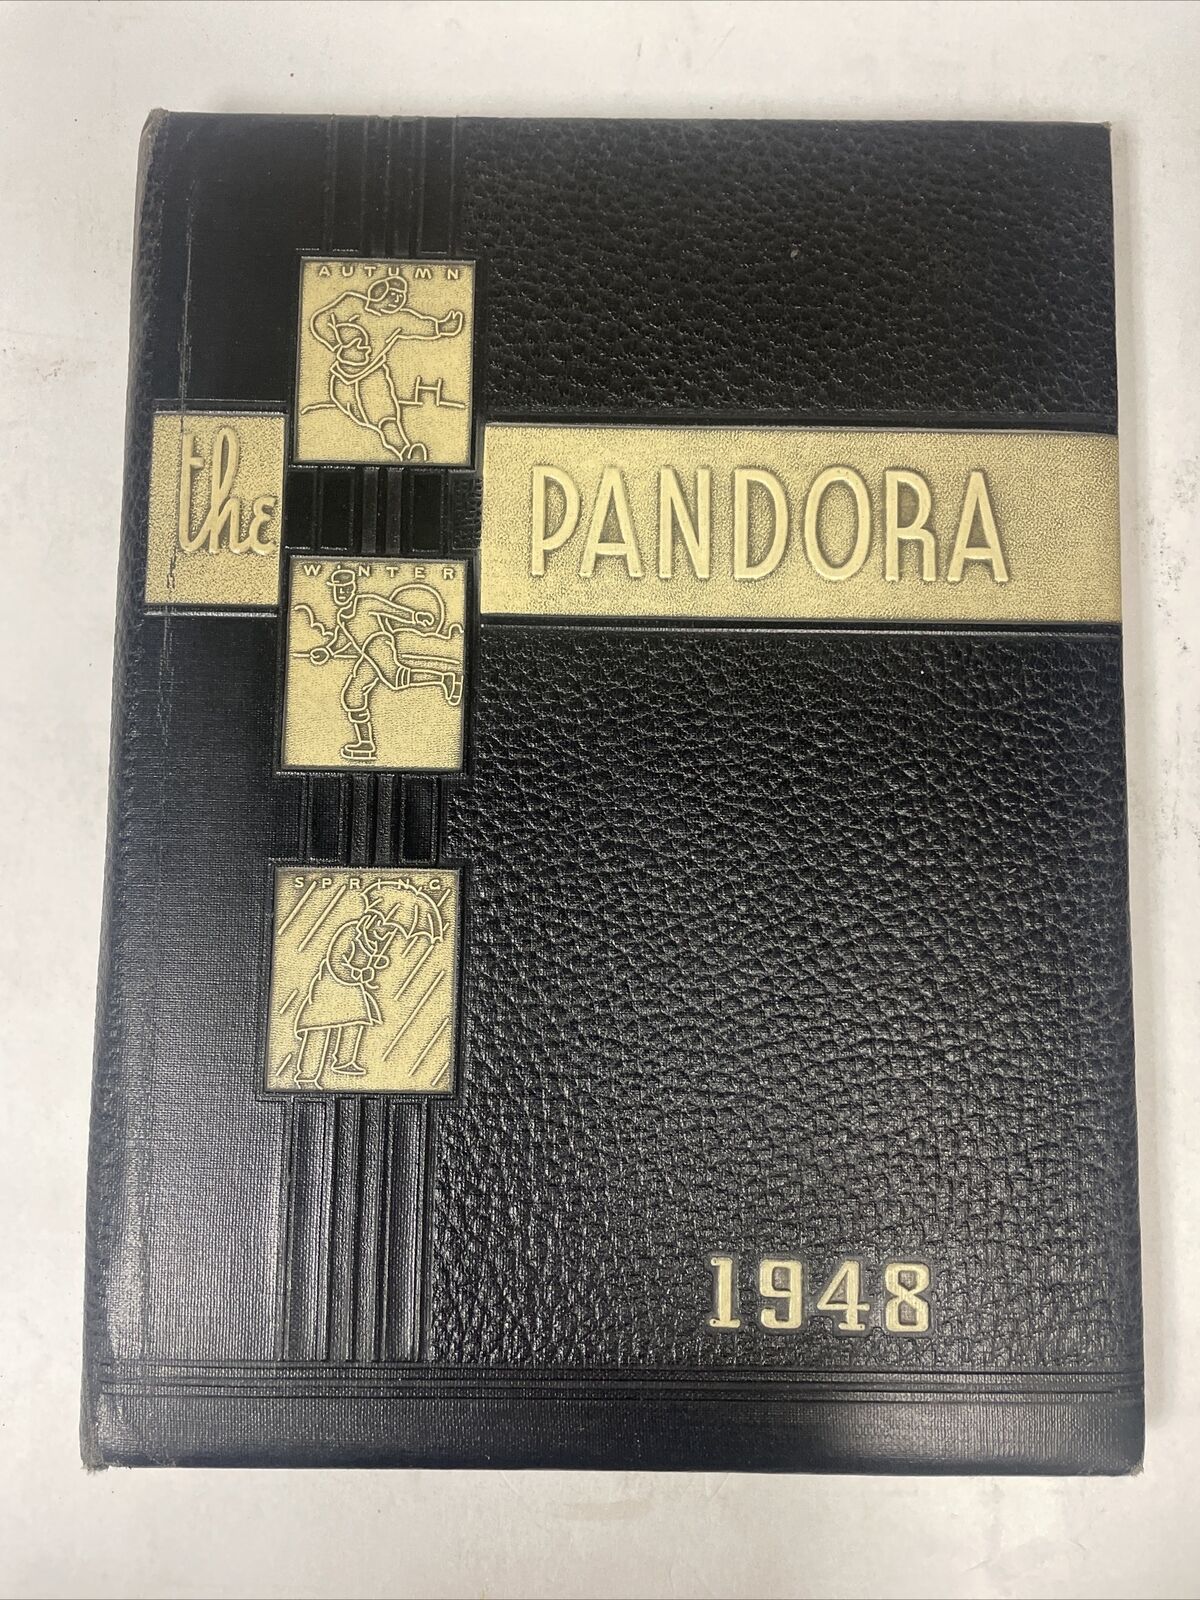 Washington and Jefferson College 1948 Yearbook | The Pandora